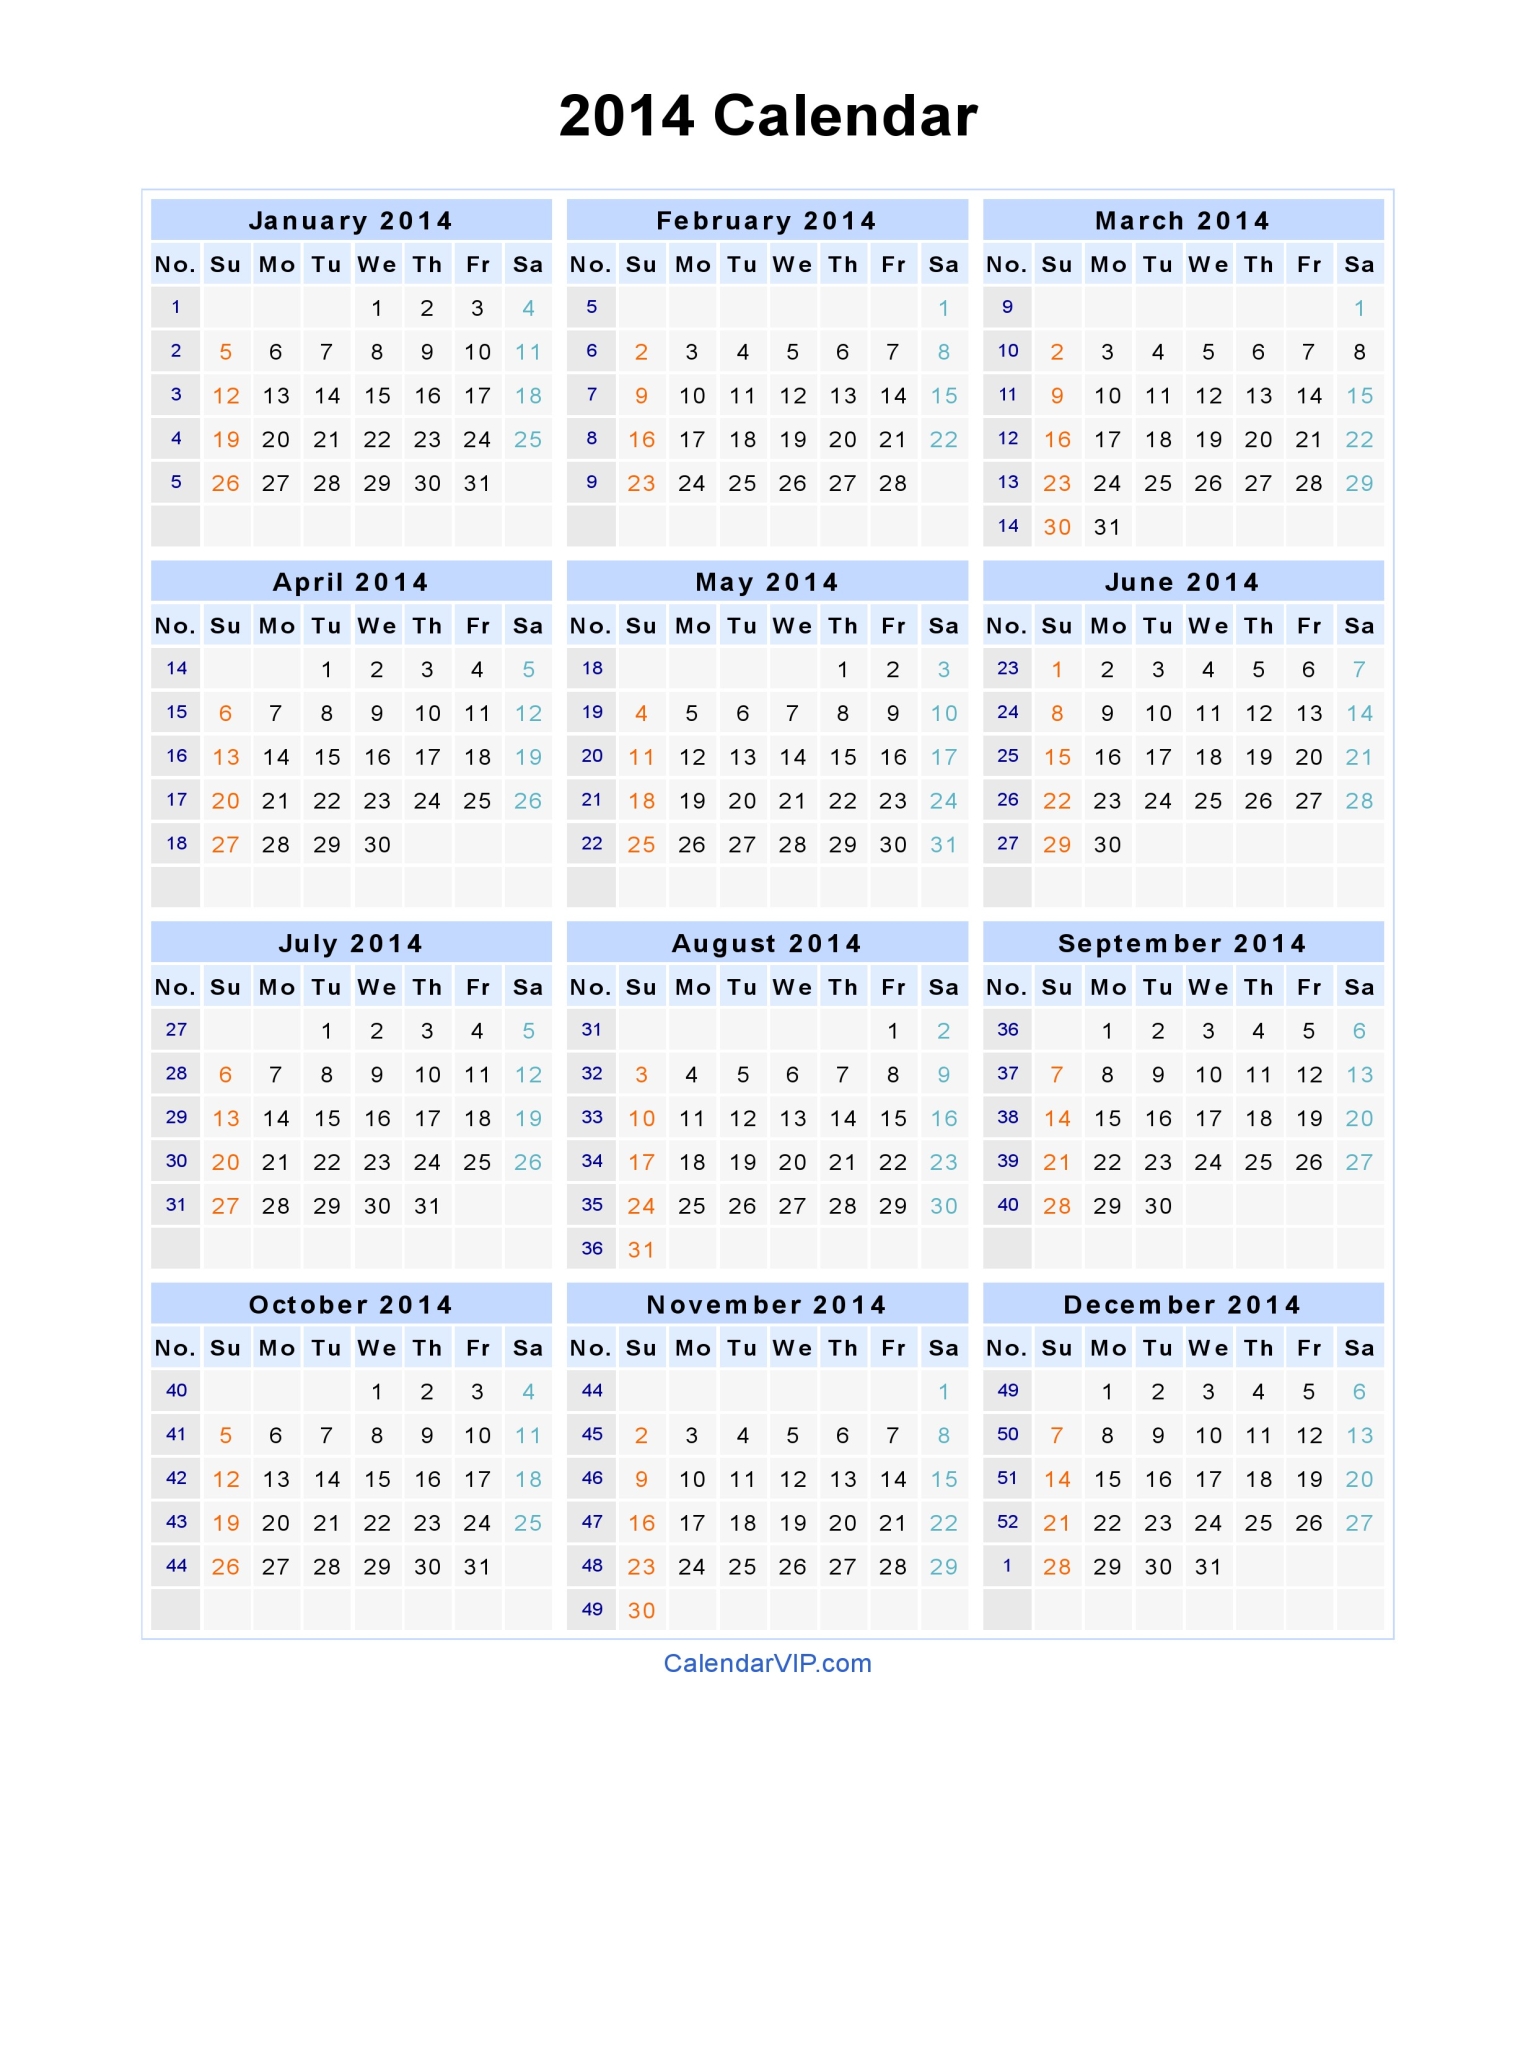 2014 Calendar - Blank Printable Calendar Template in PDF ...
